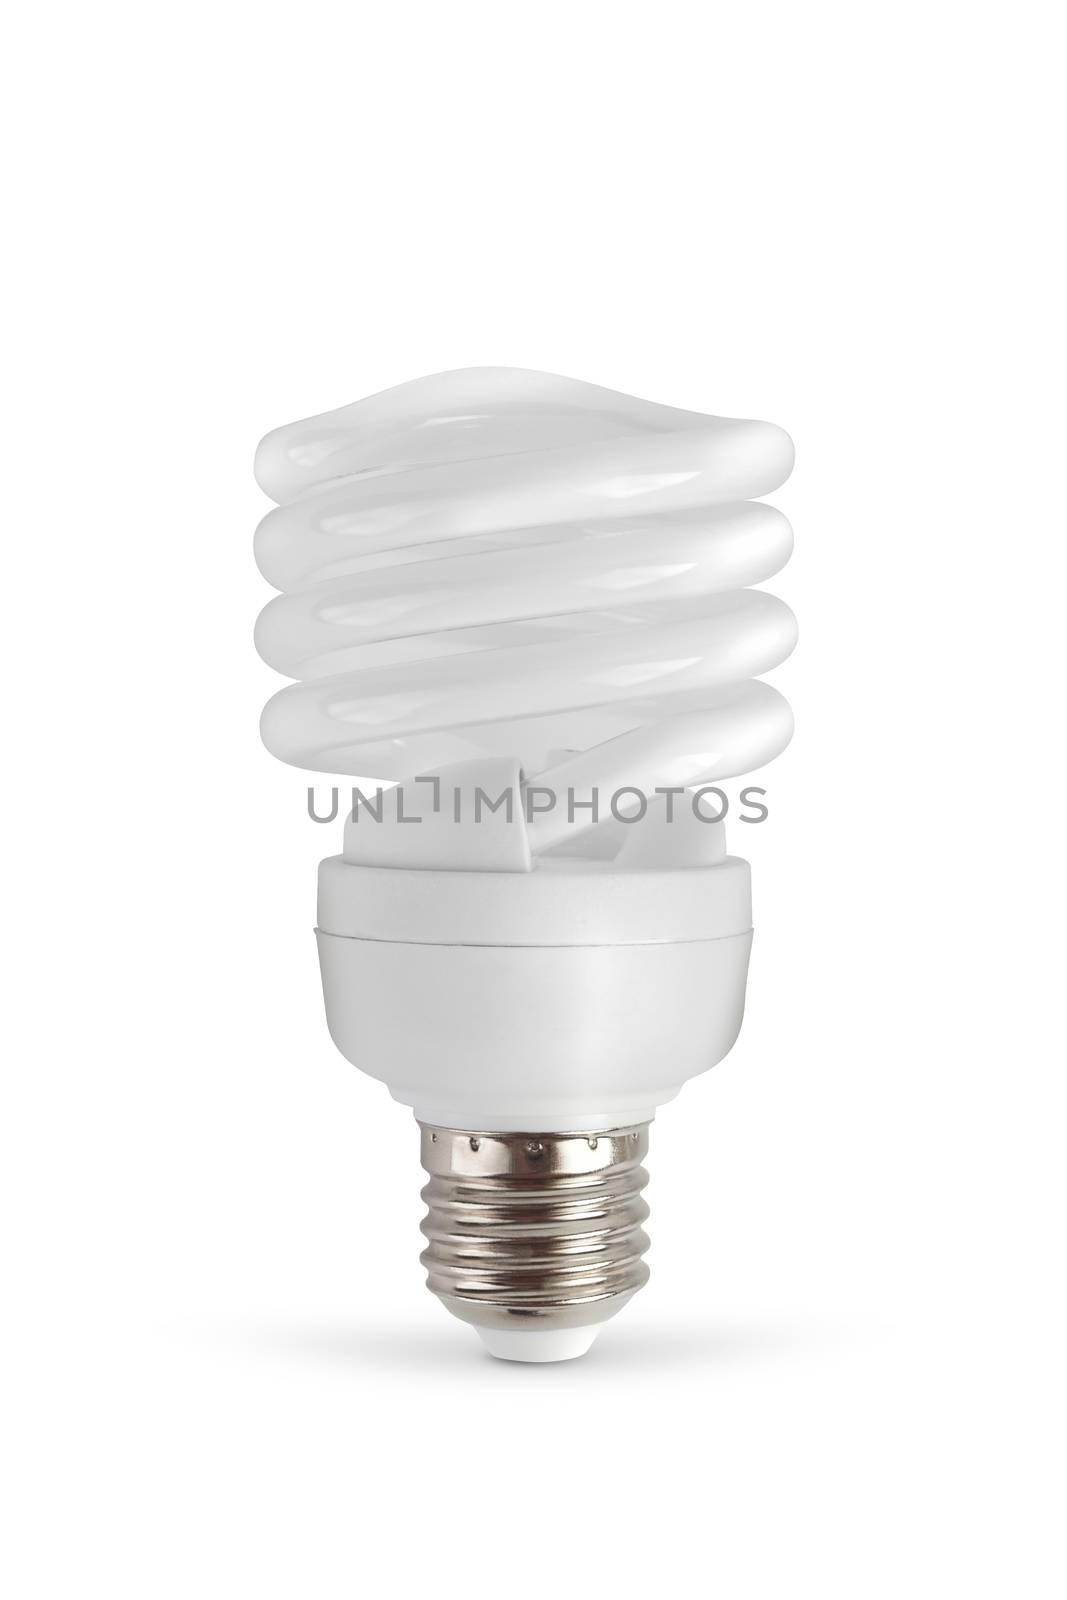 Energy saving light bulb by SlayCer